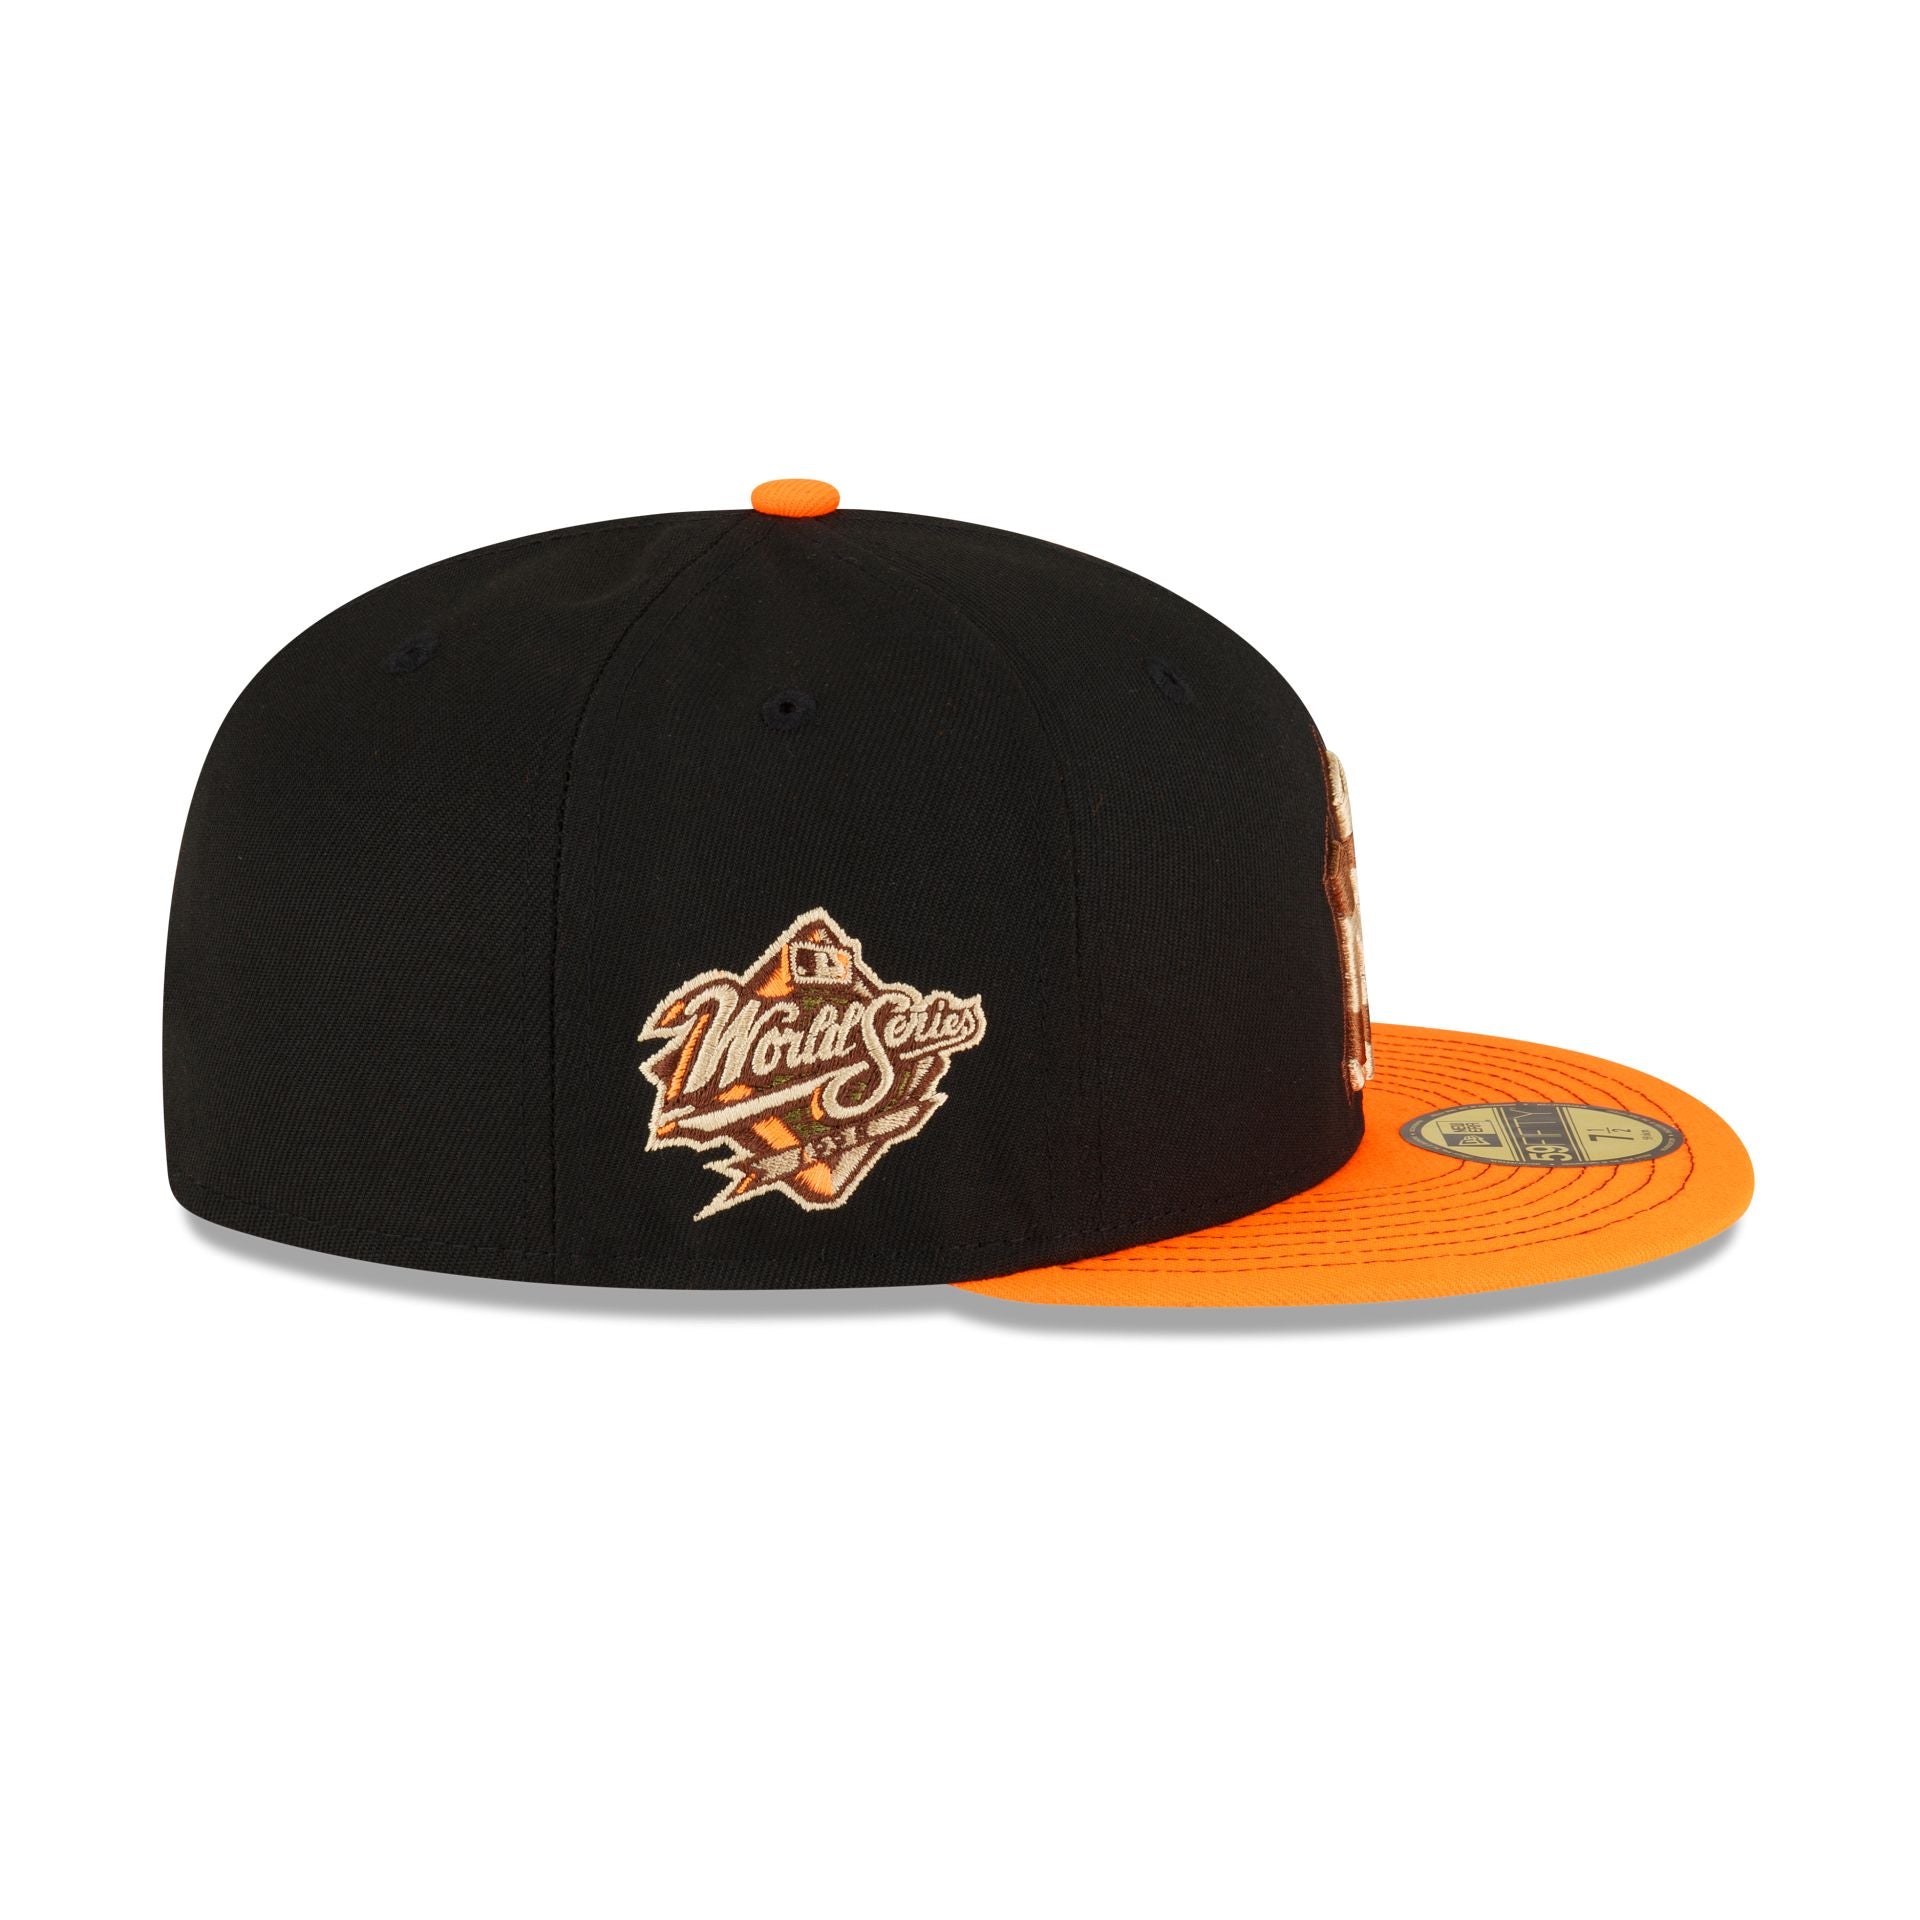 Just Caps Orange New New Visor Fitted – Era York Cap Yankees Hat 59FIFTY